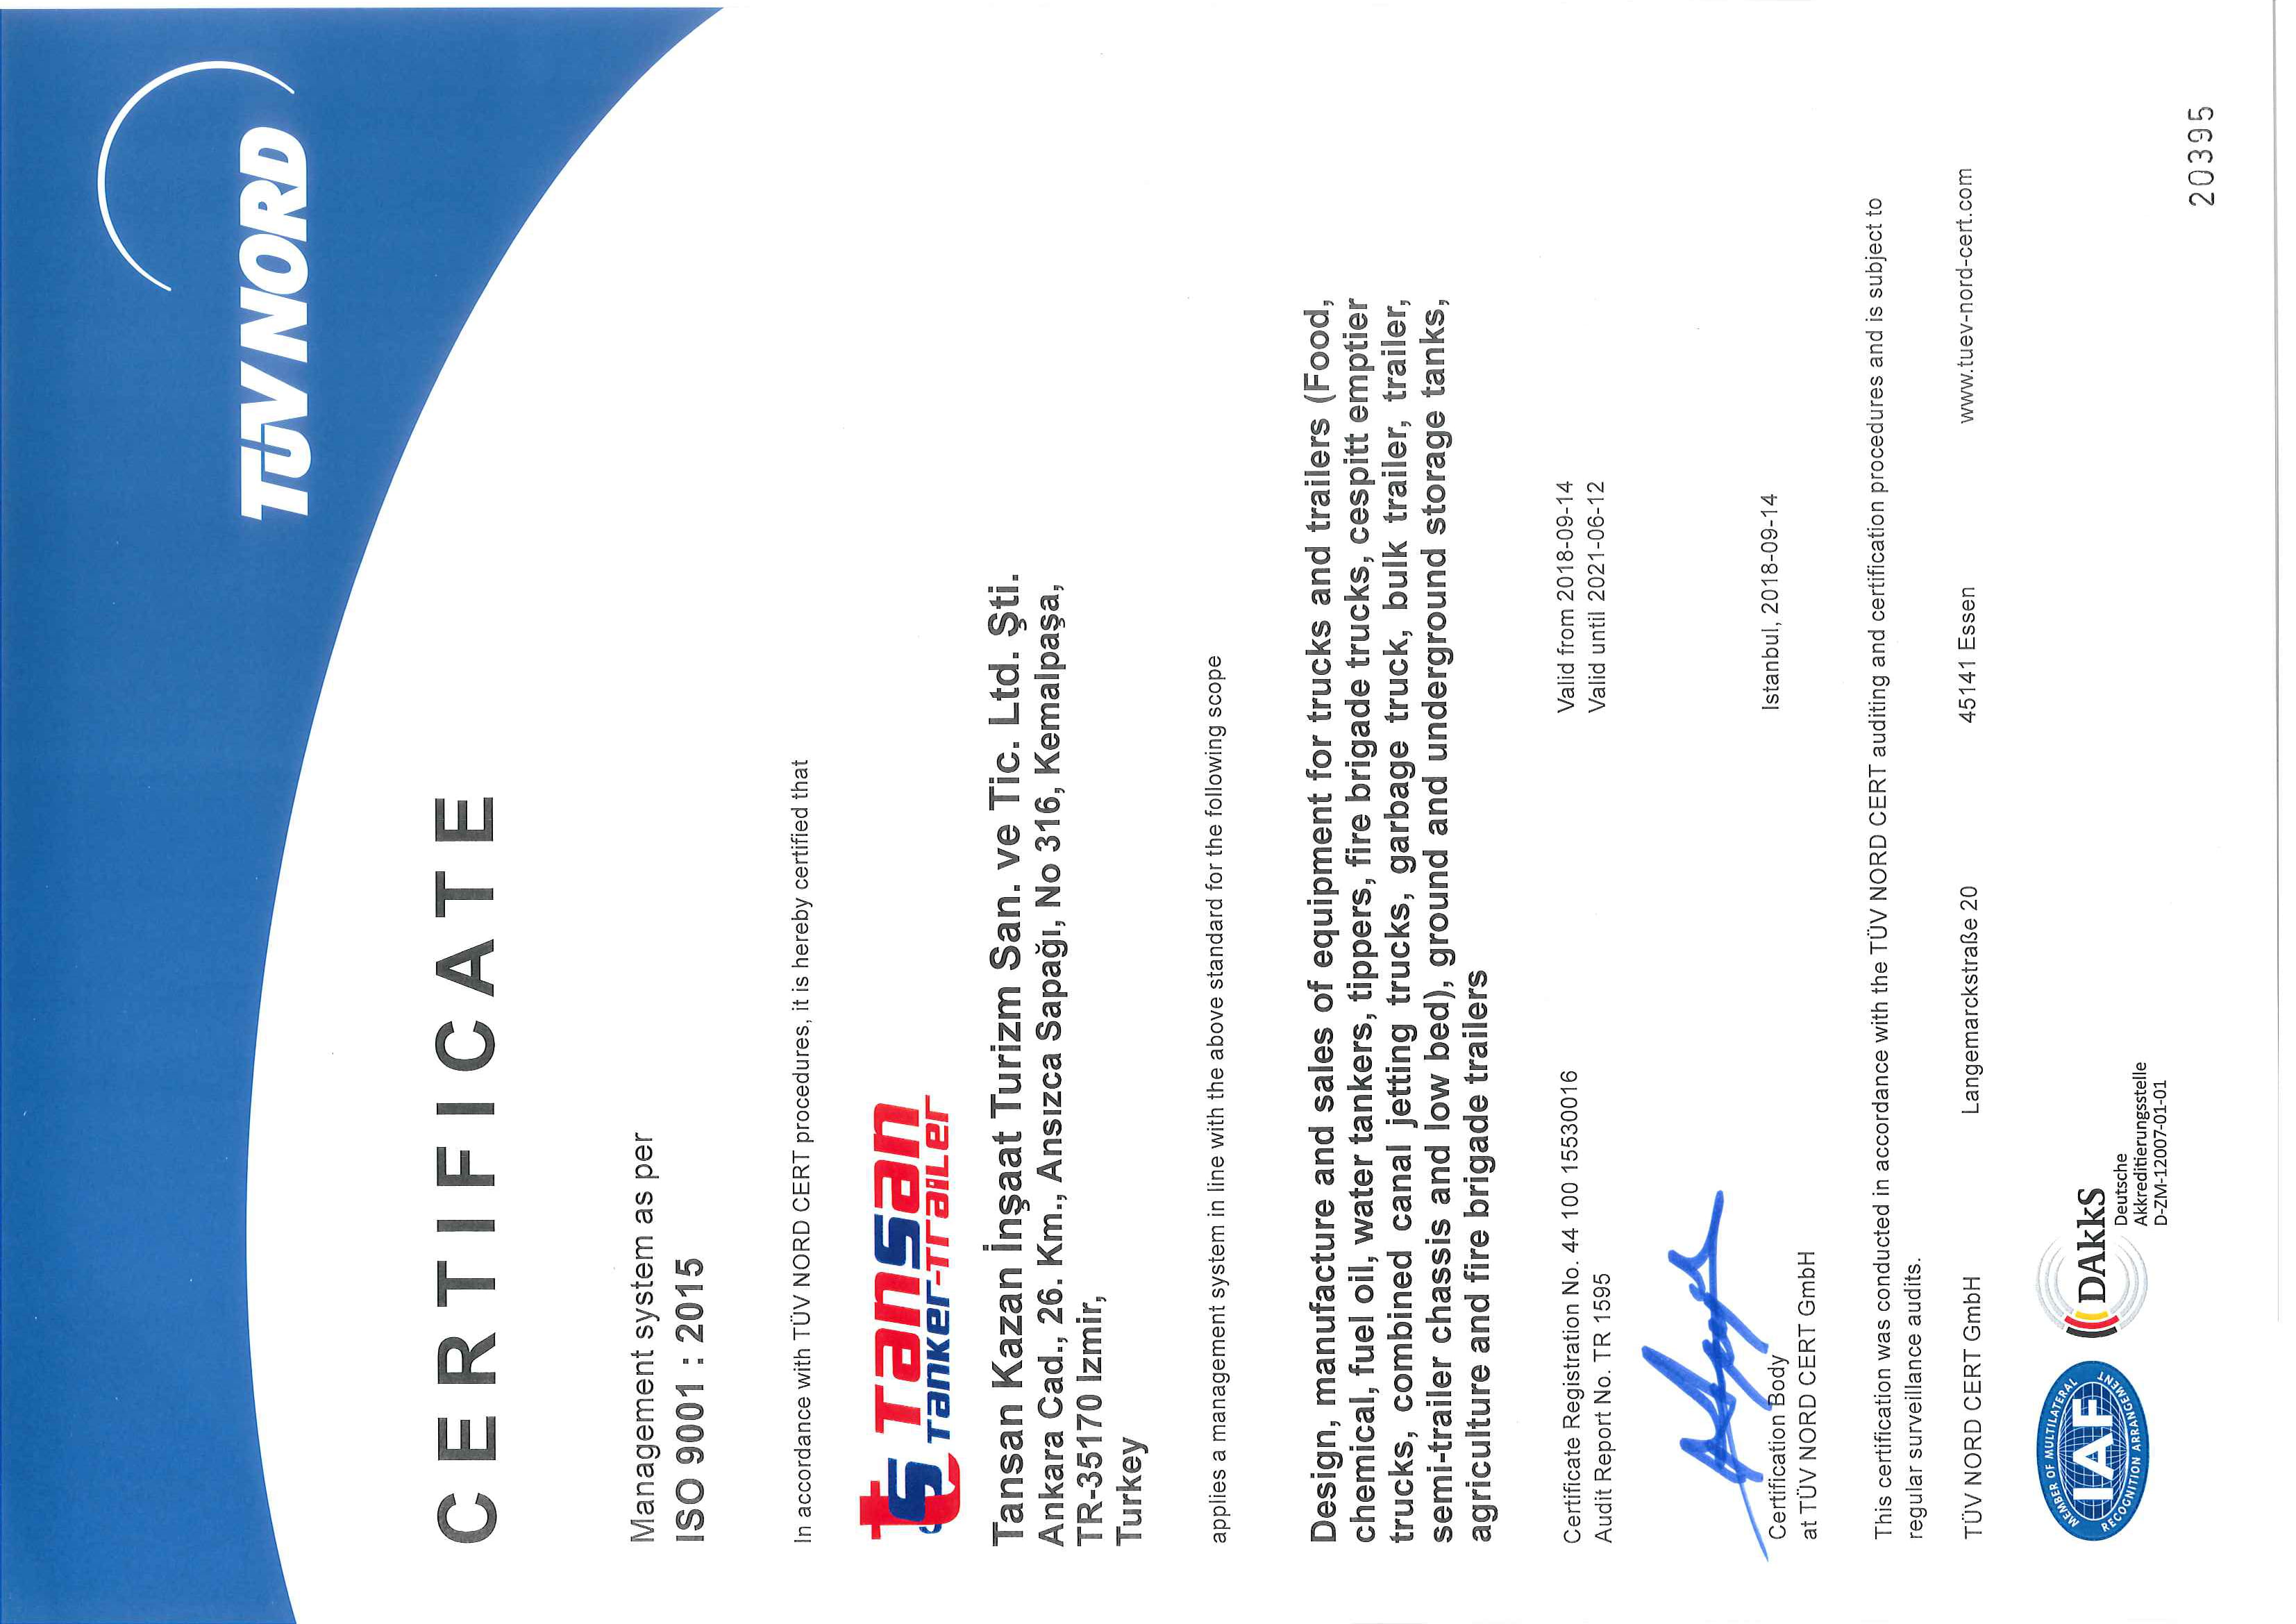 Tansan-9001-certificates-1.jpg